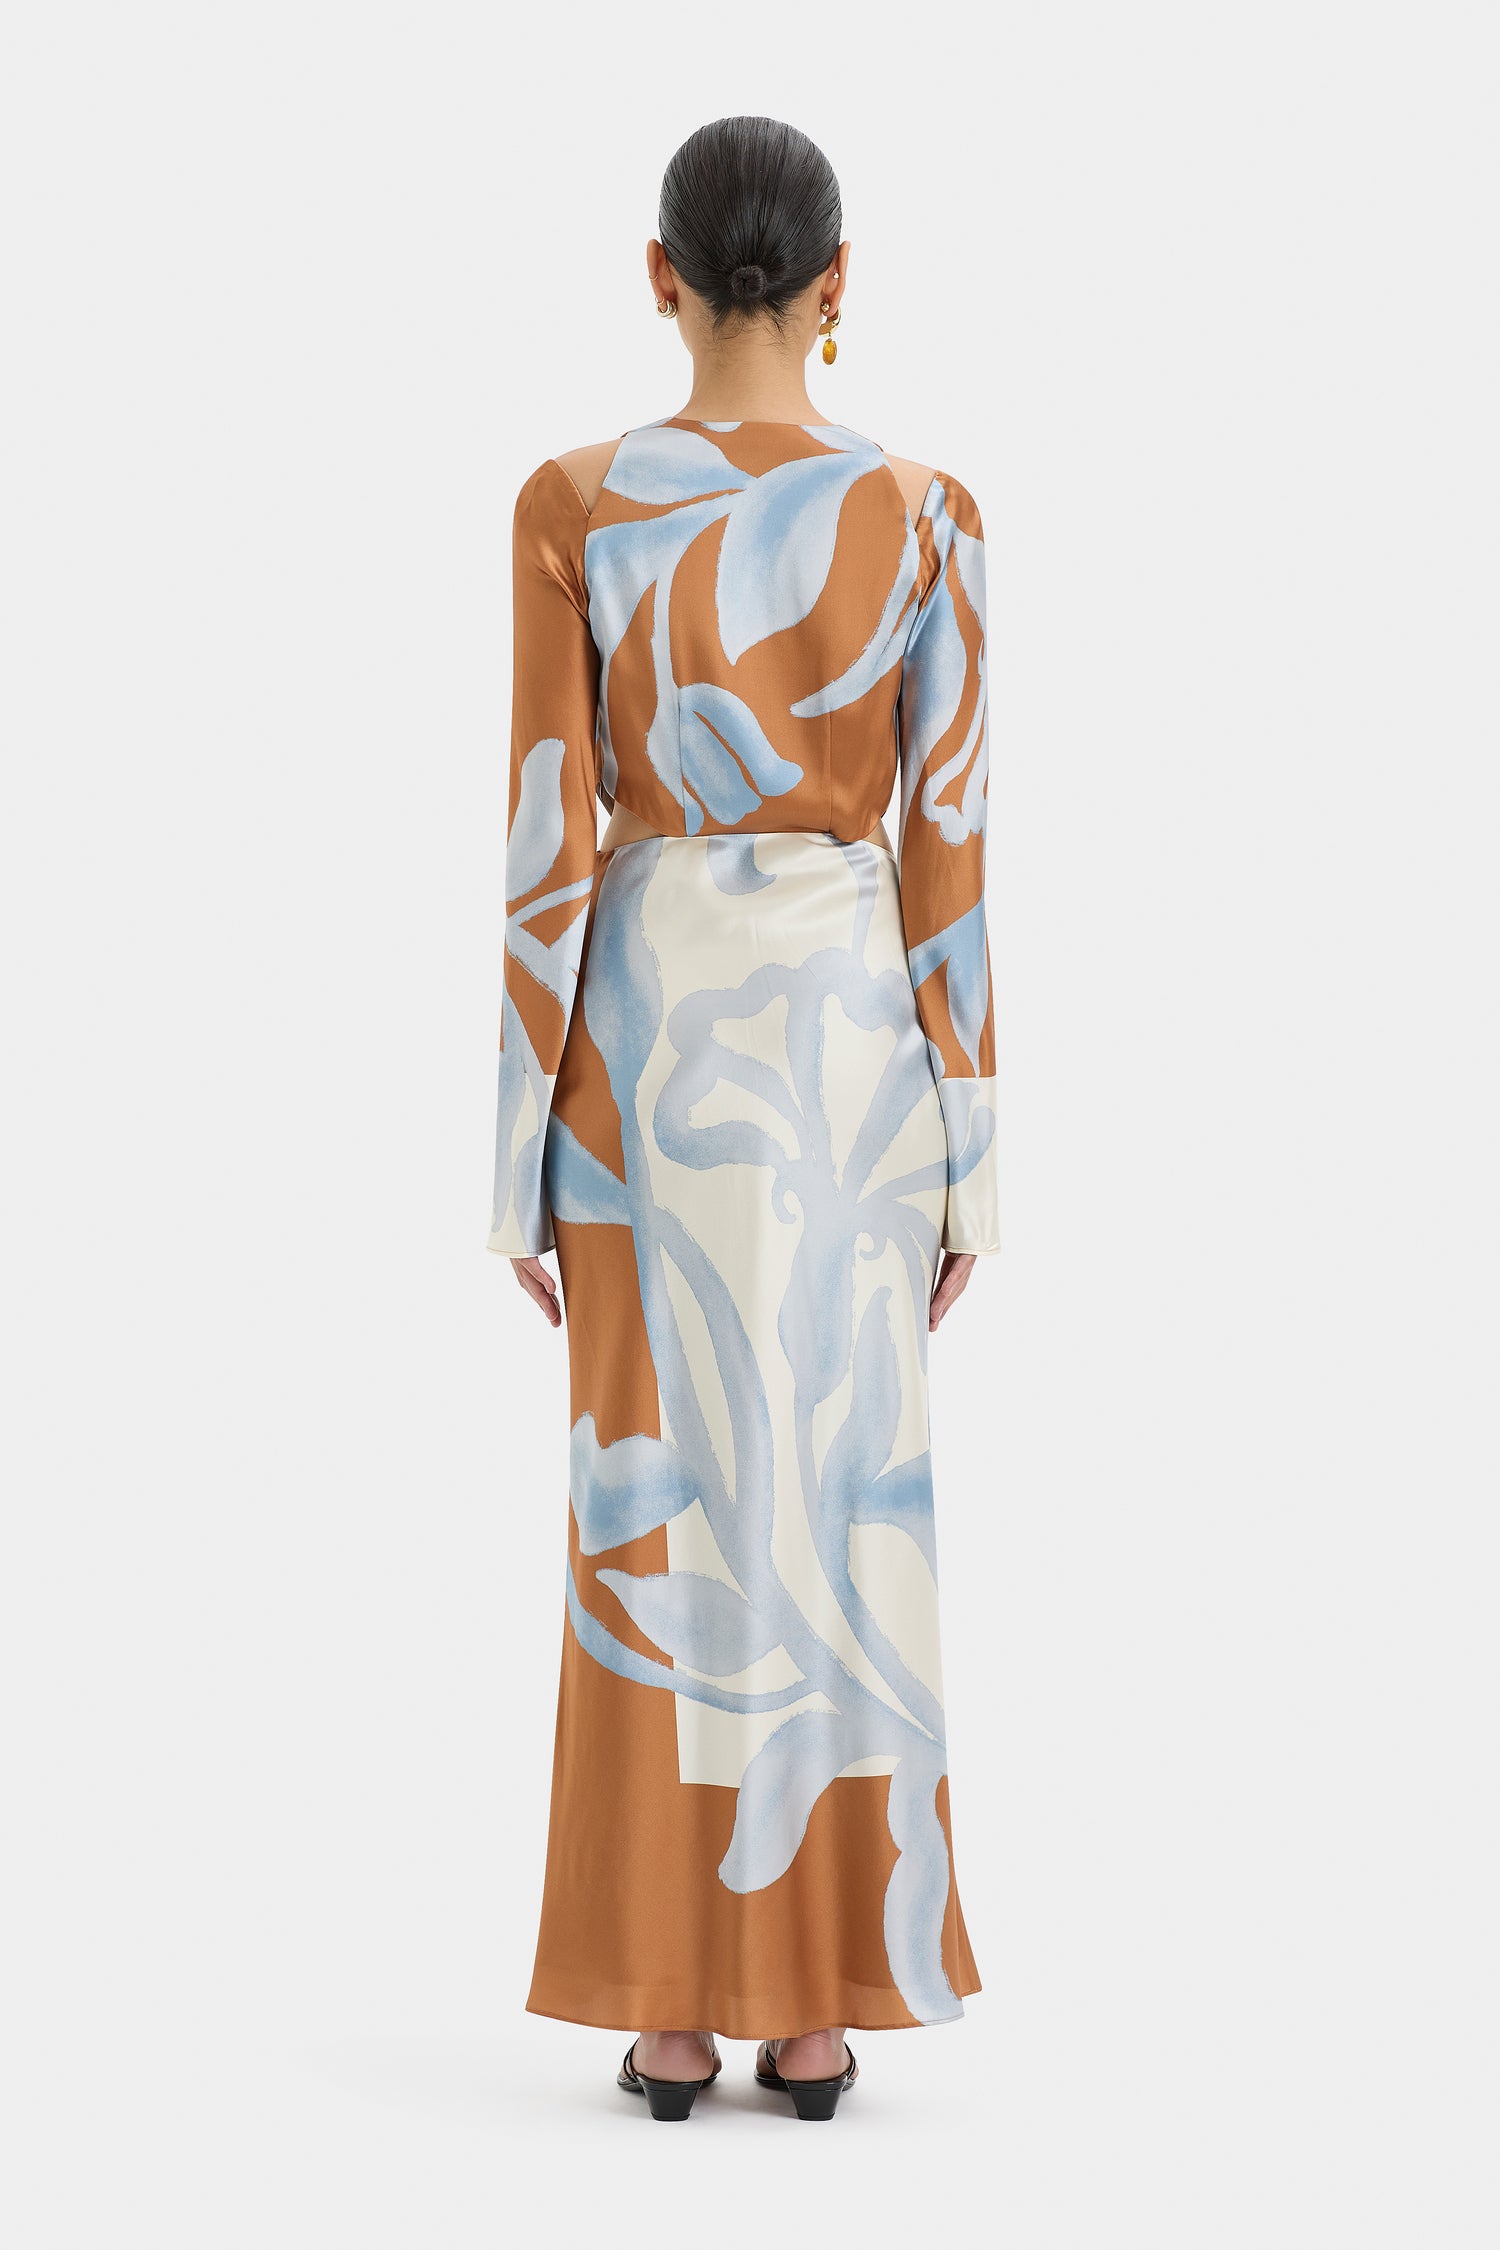 Sorrento Scarf Dress - Sciarpa Print